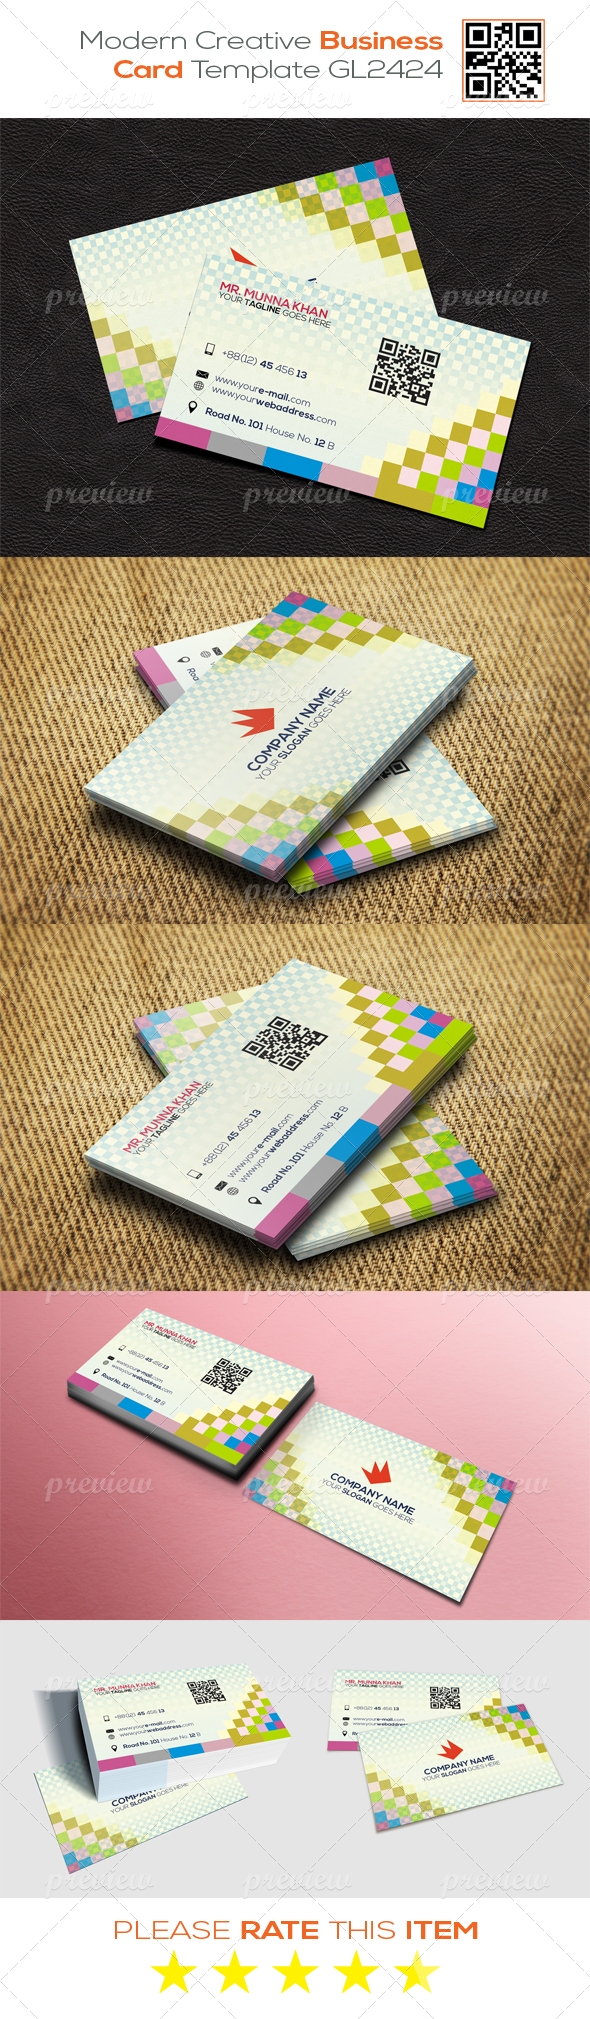 Modern Creative Business Card Template GL2424